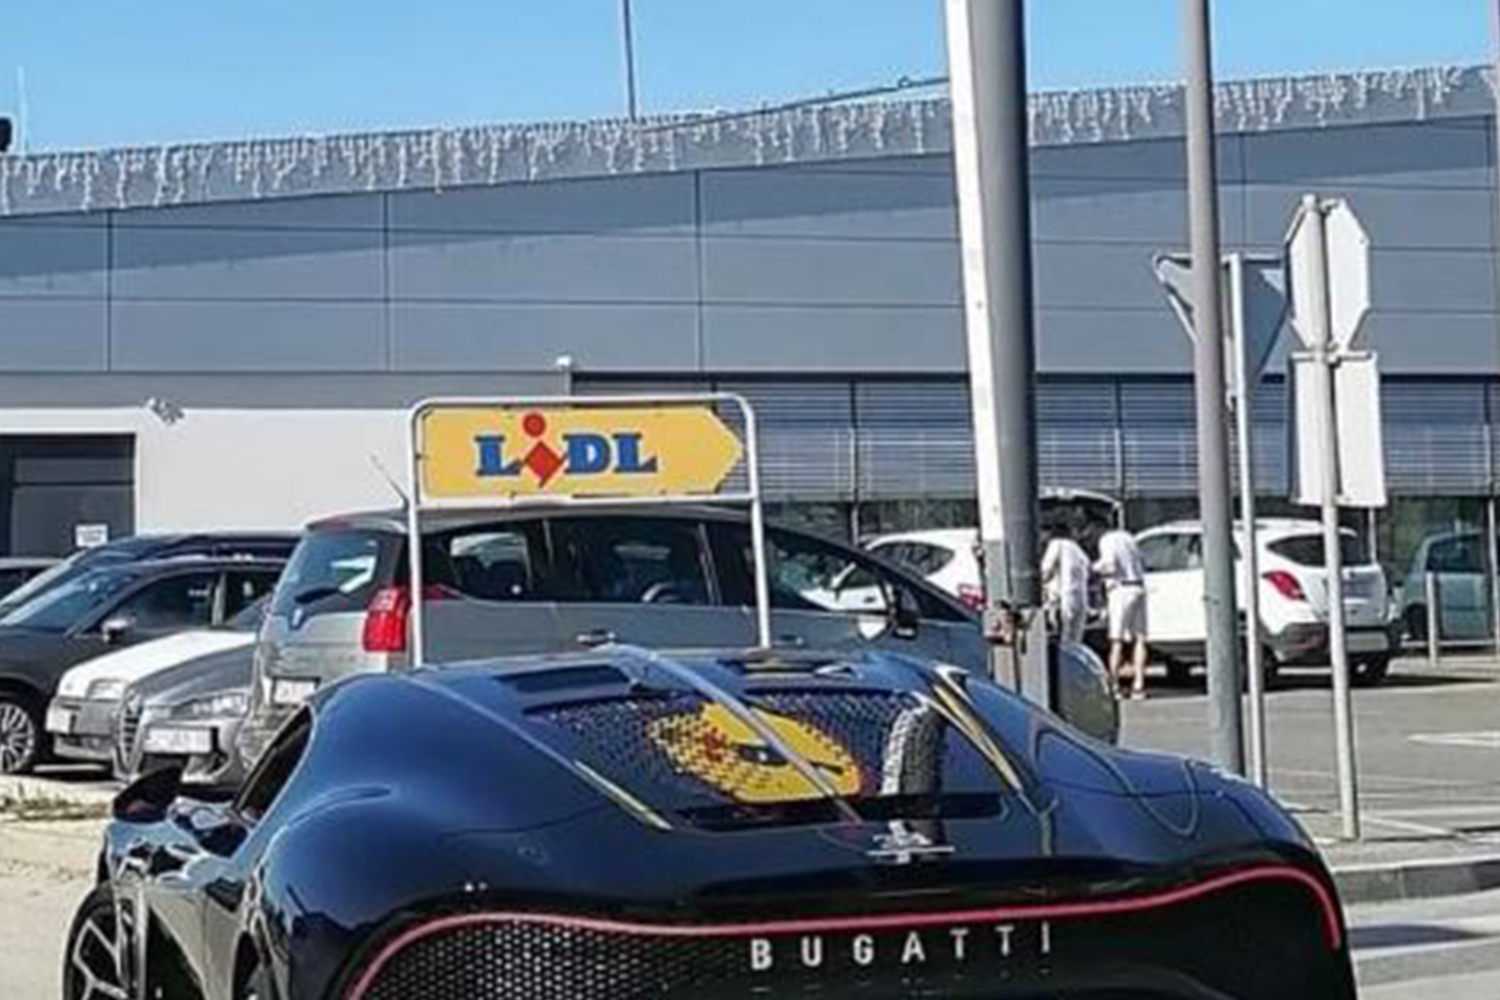 A Bugatti rolled into a Lidl car park